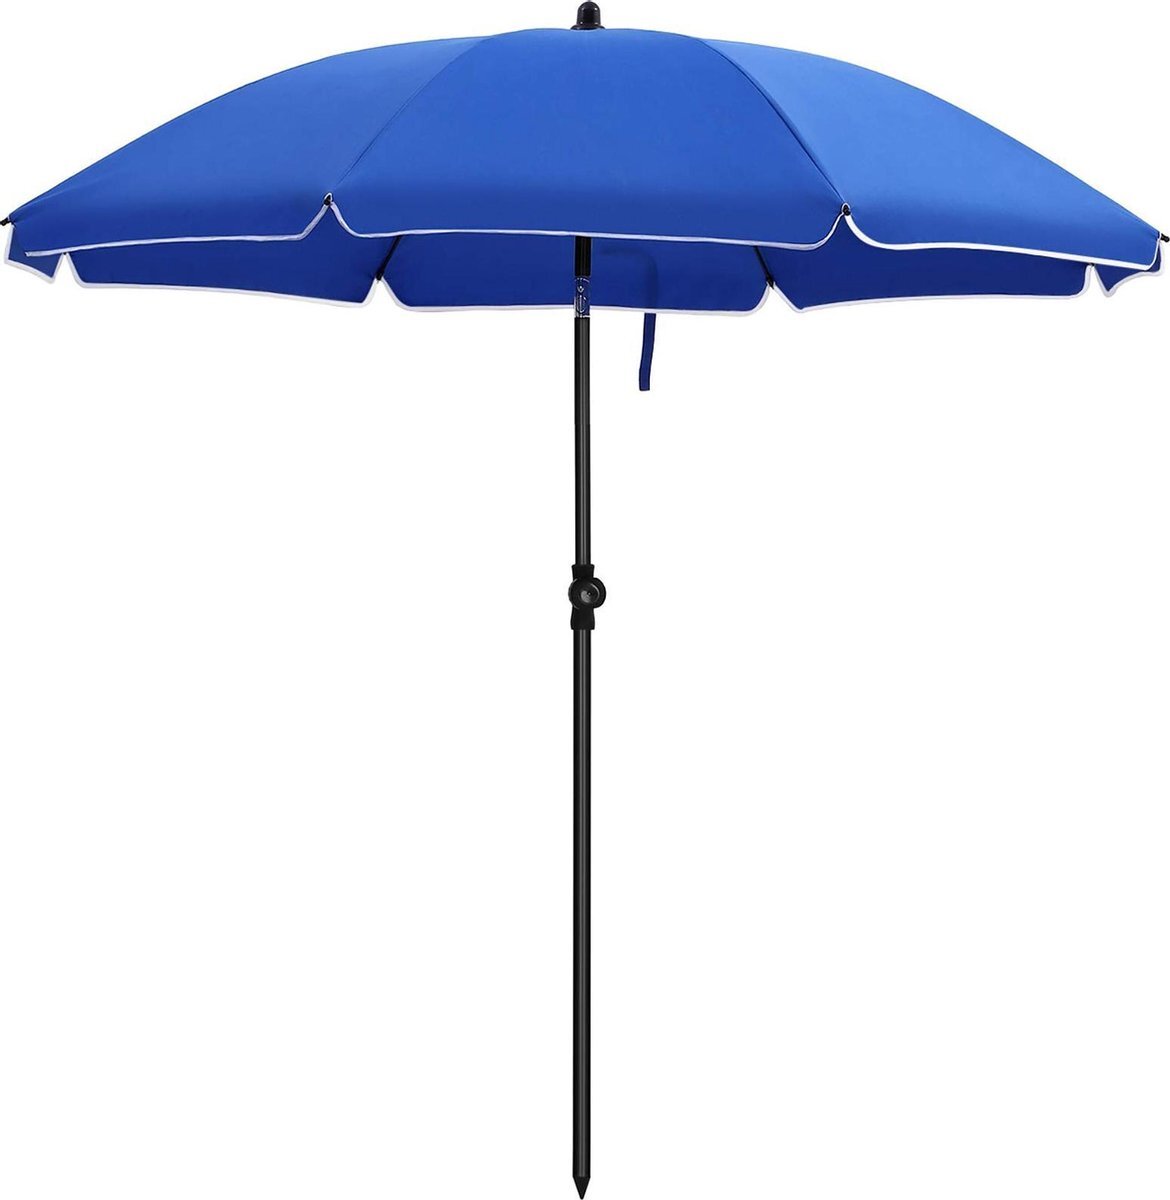 Acaza Stokparasol - Ø 160 cm - achthoekig - kantelbaar - met draagtas - blauw